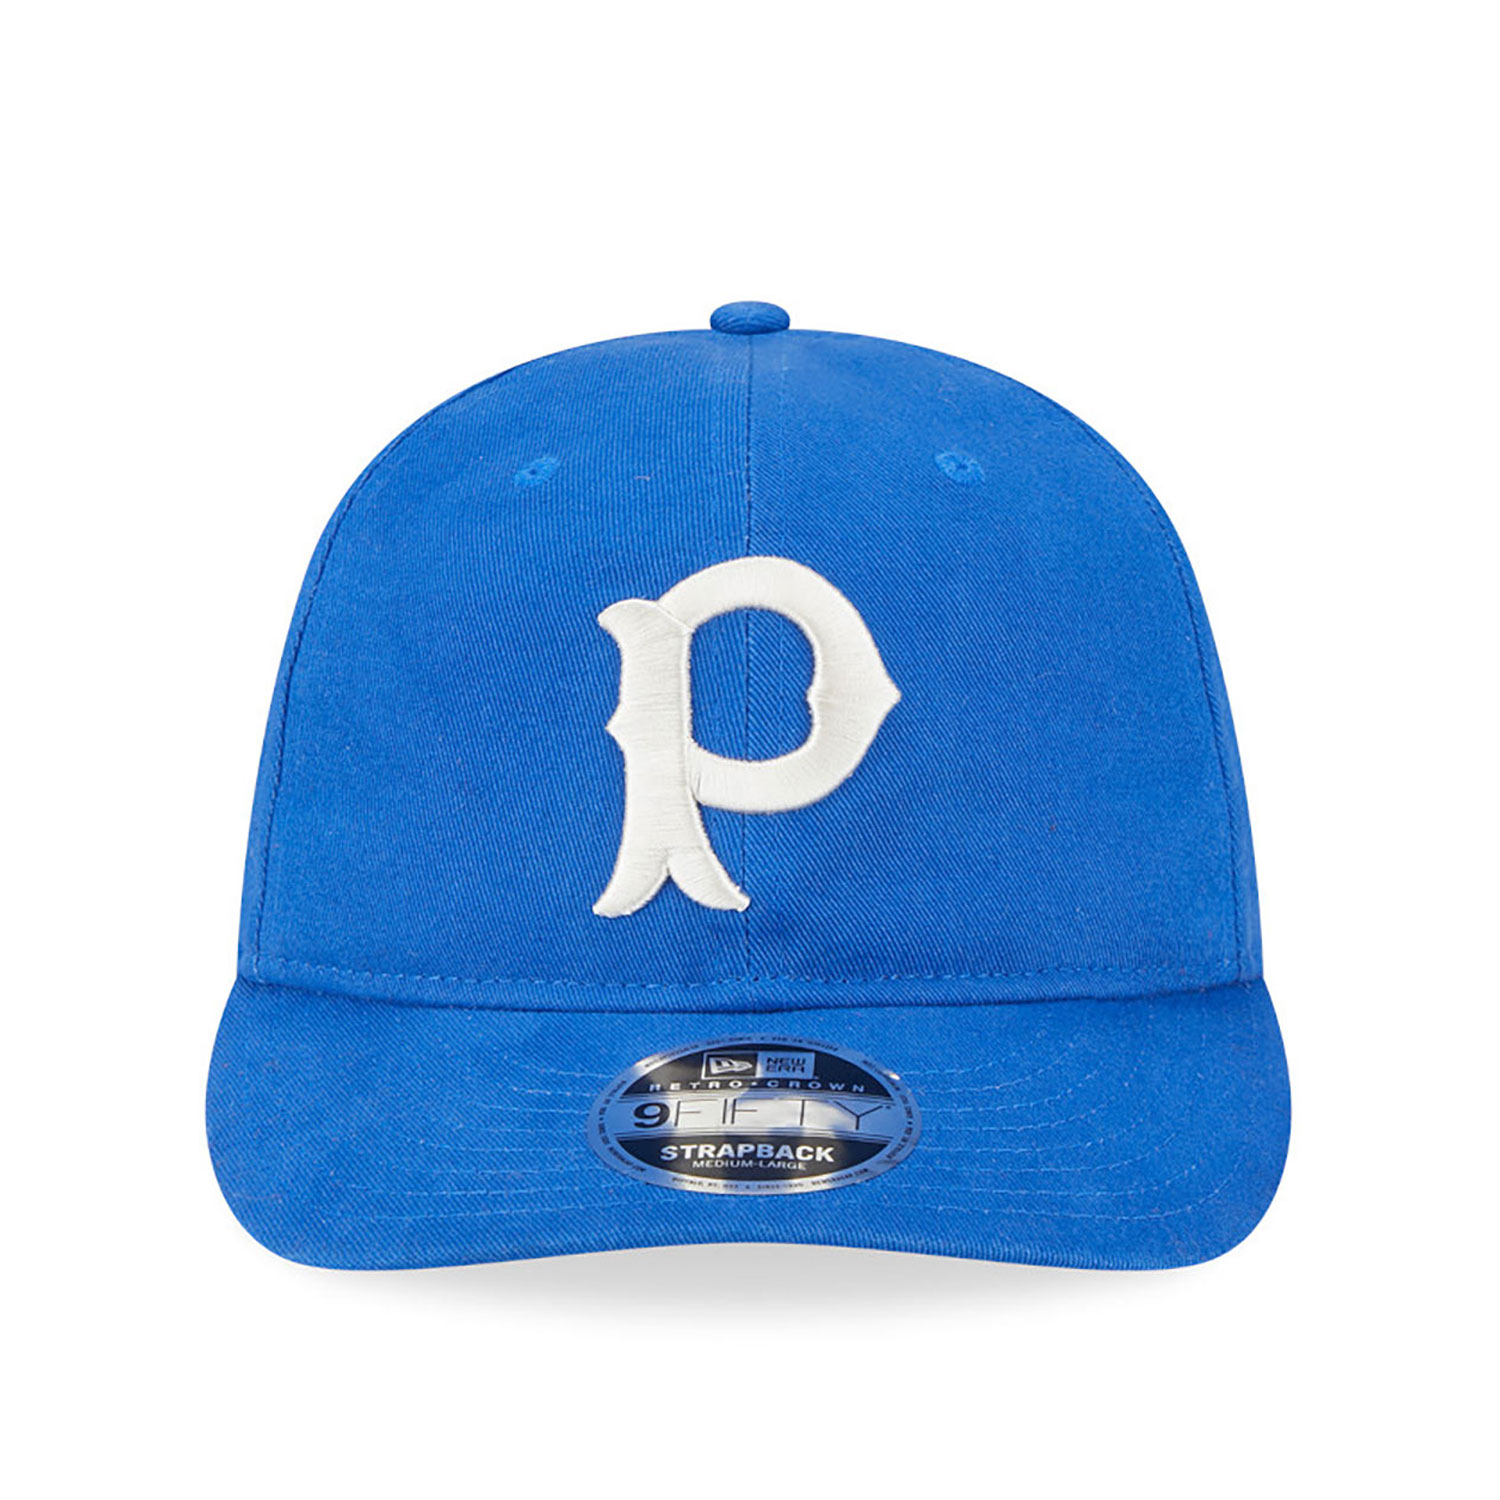 Vintage New Era Pittsburgh Pirates adjustable strapback dad hat baseball cap